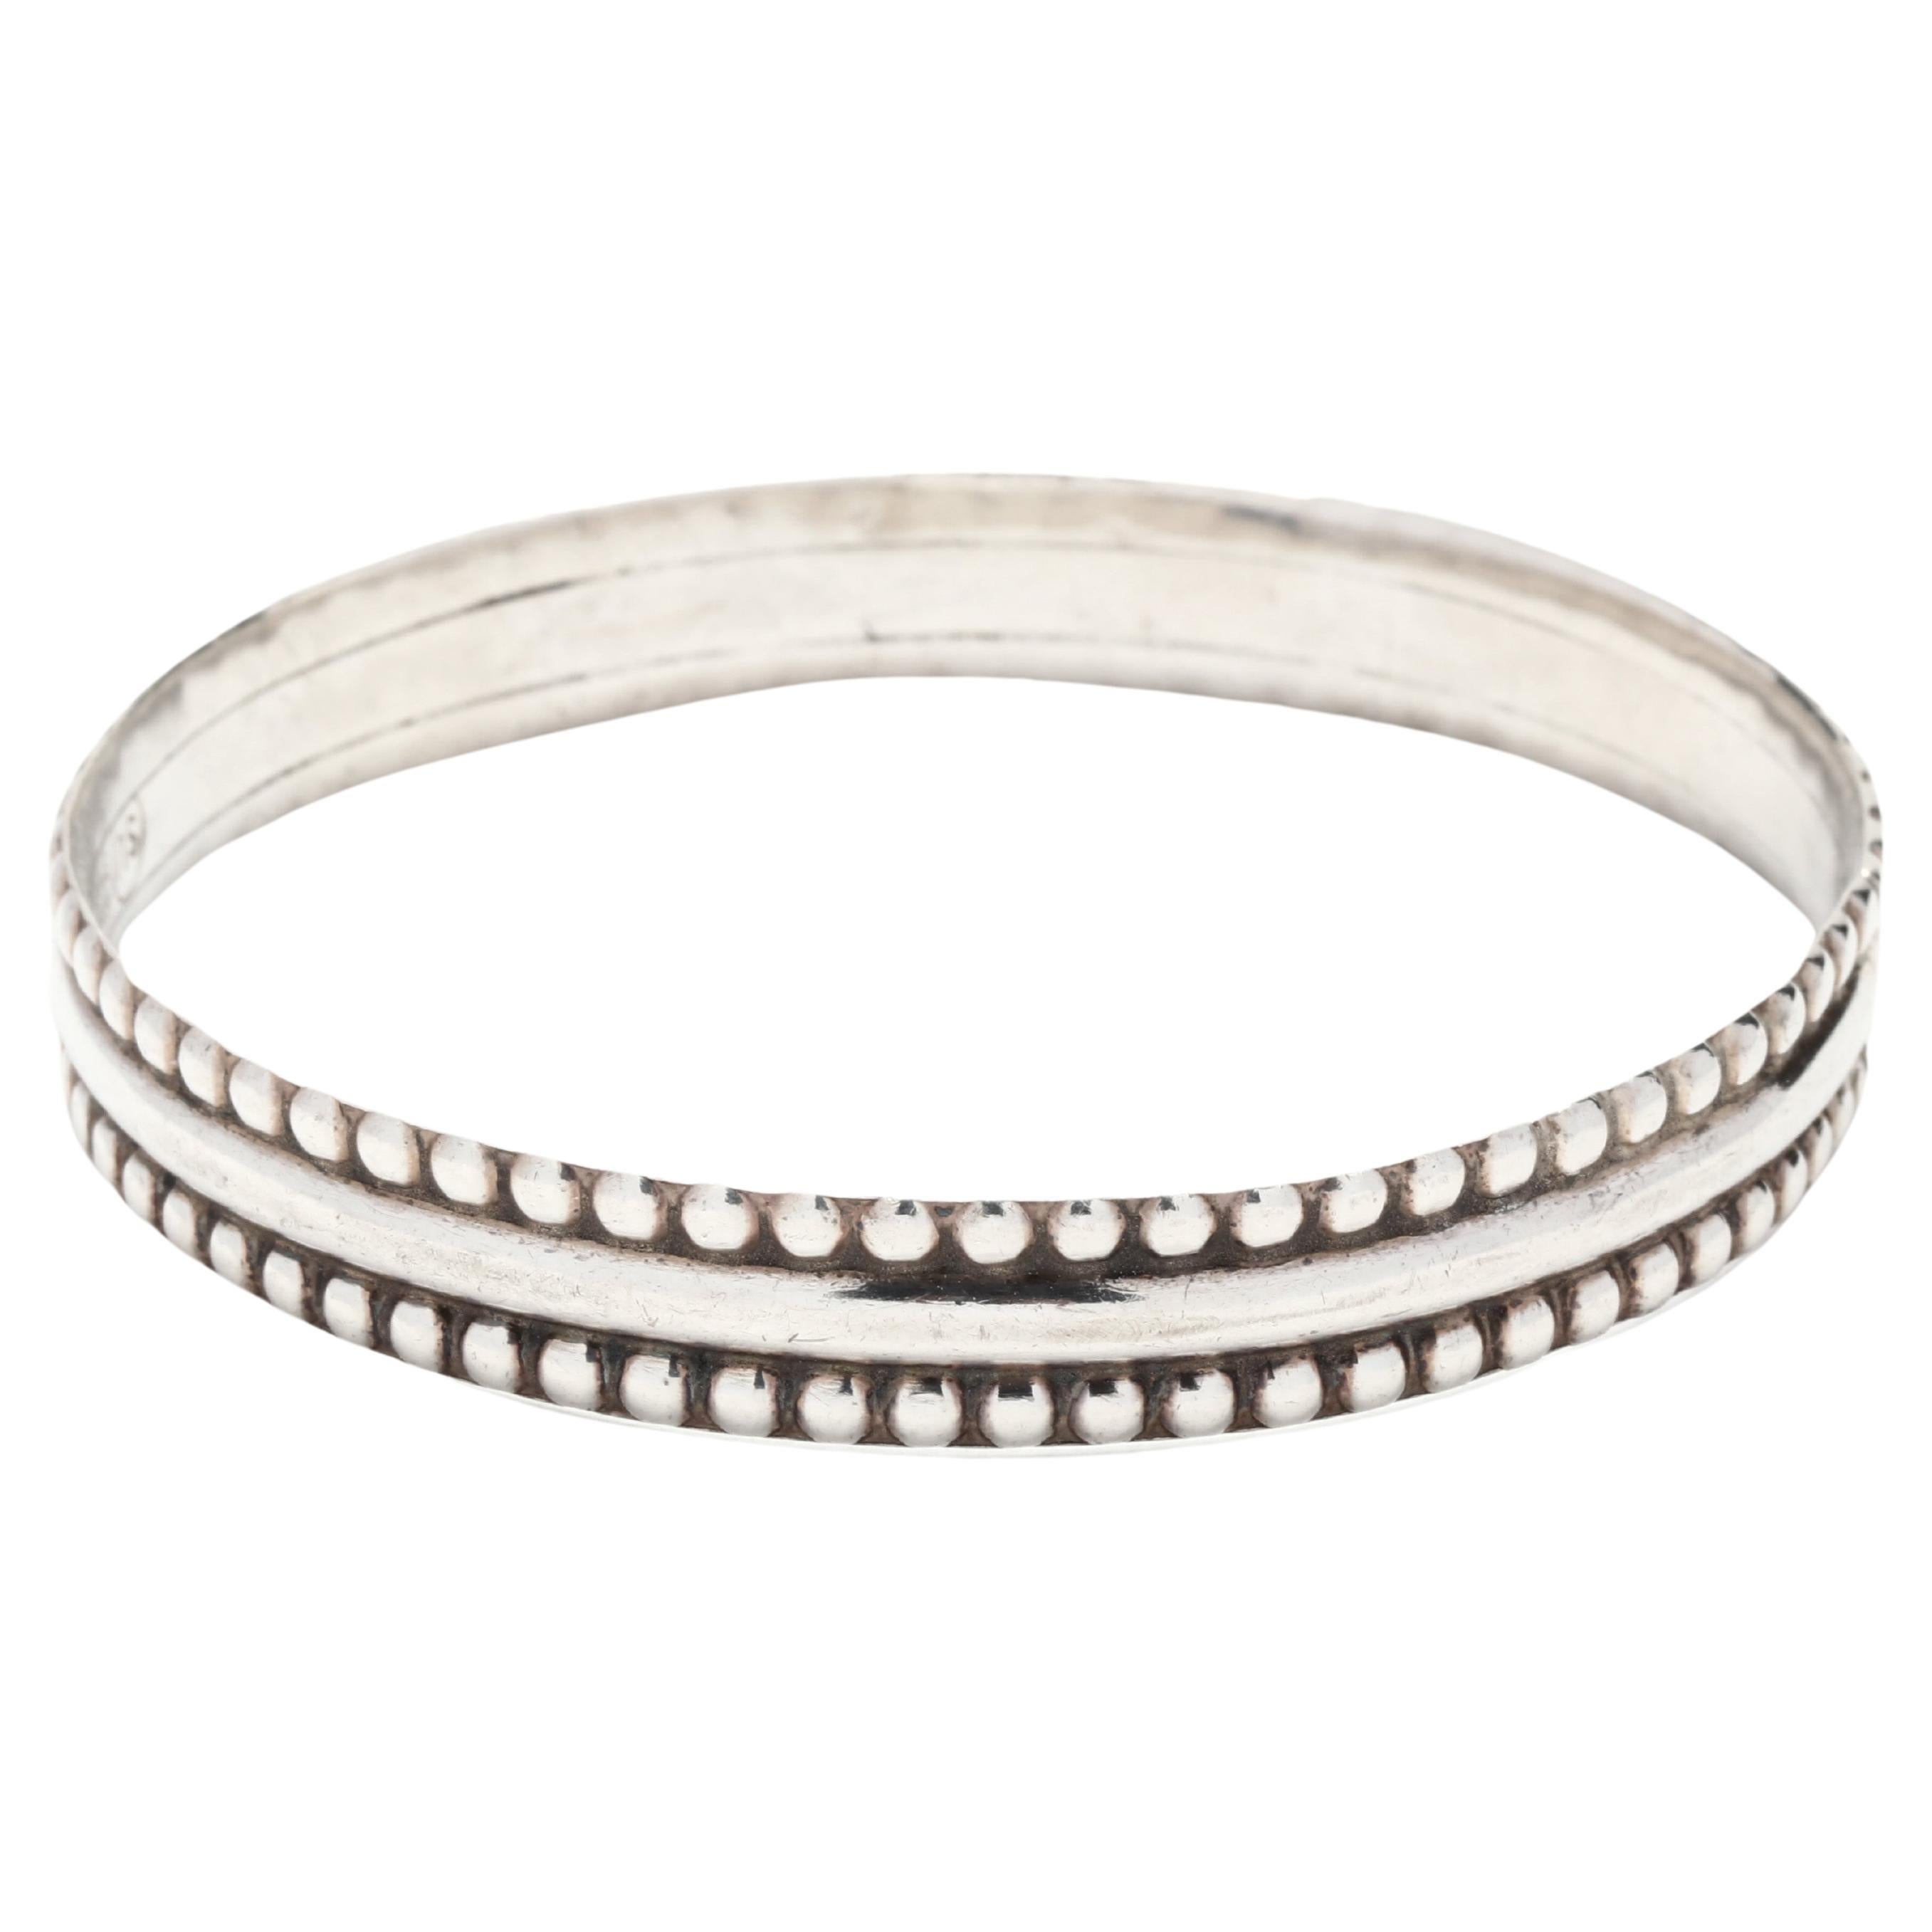  Beaded Eternity Bangle Bracelet, Sterling Silver, Length 8 Inch For Sale